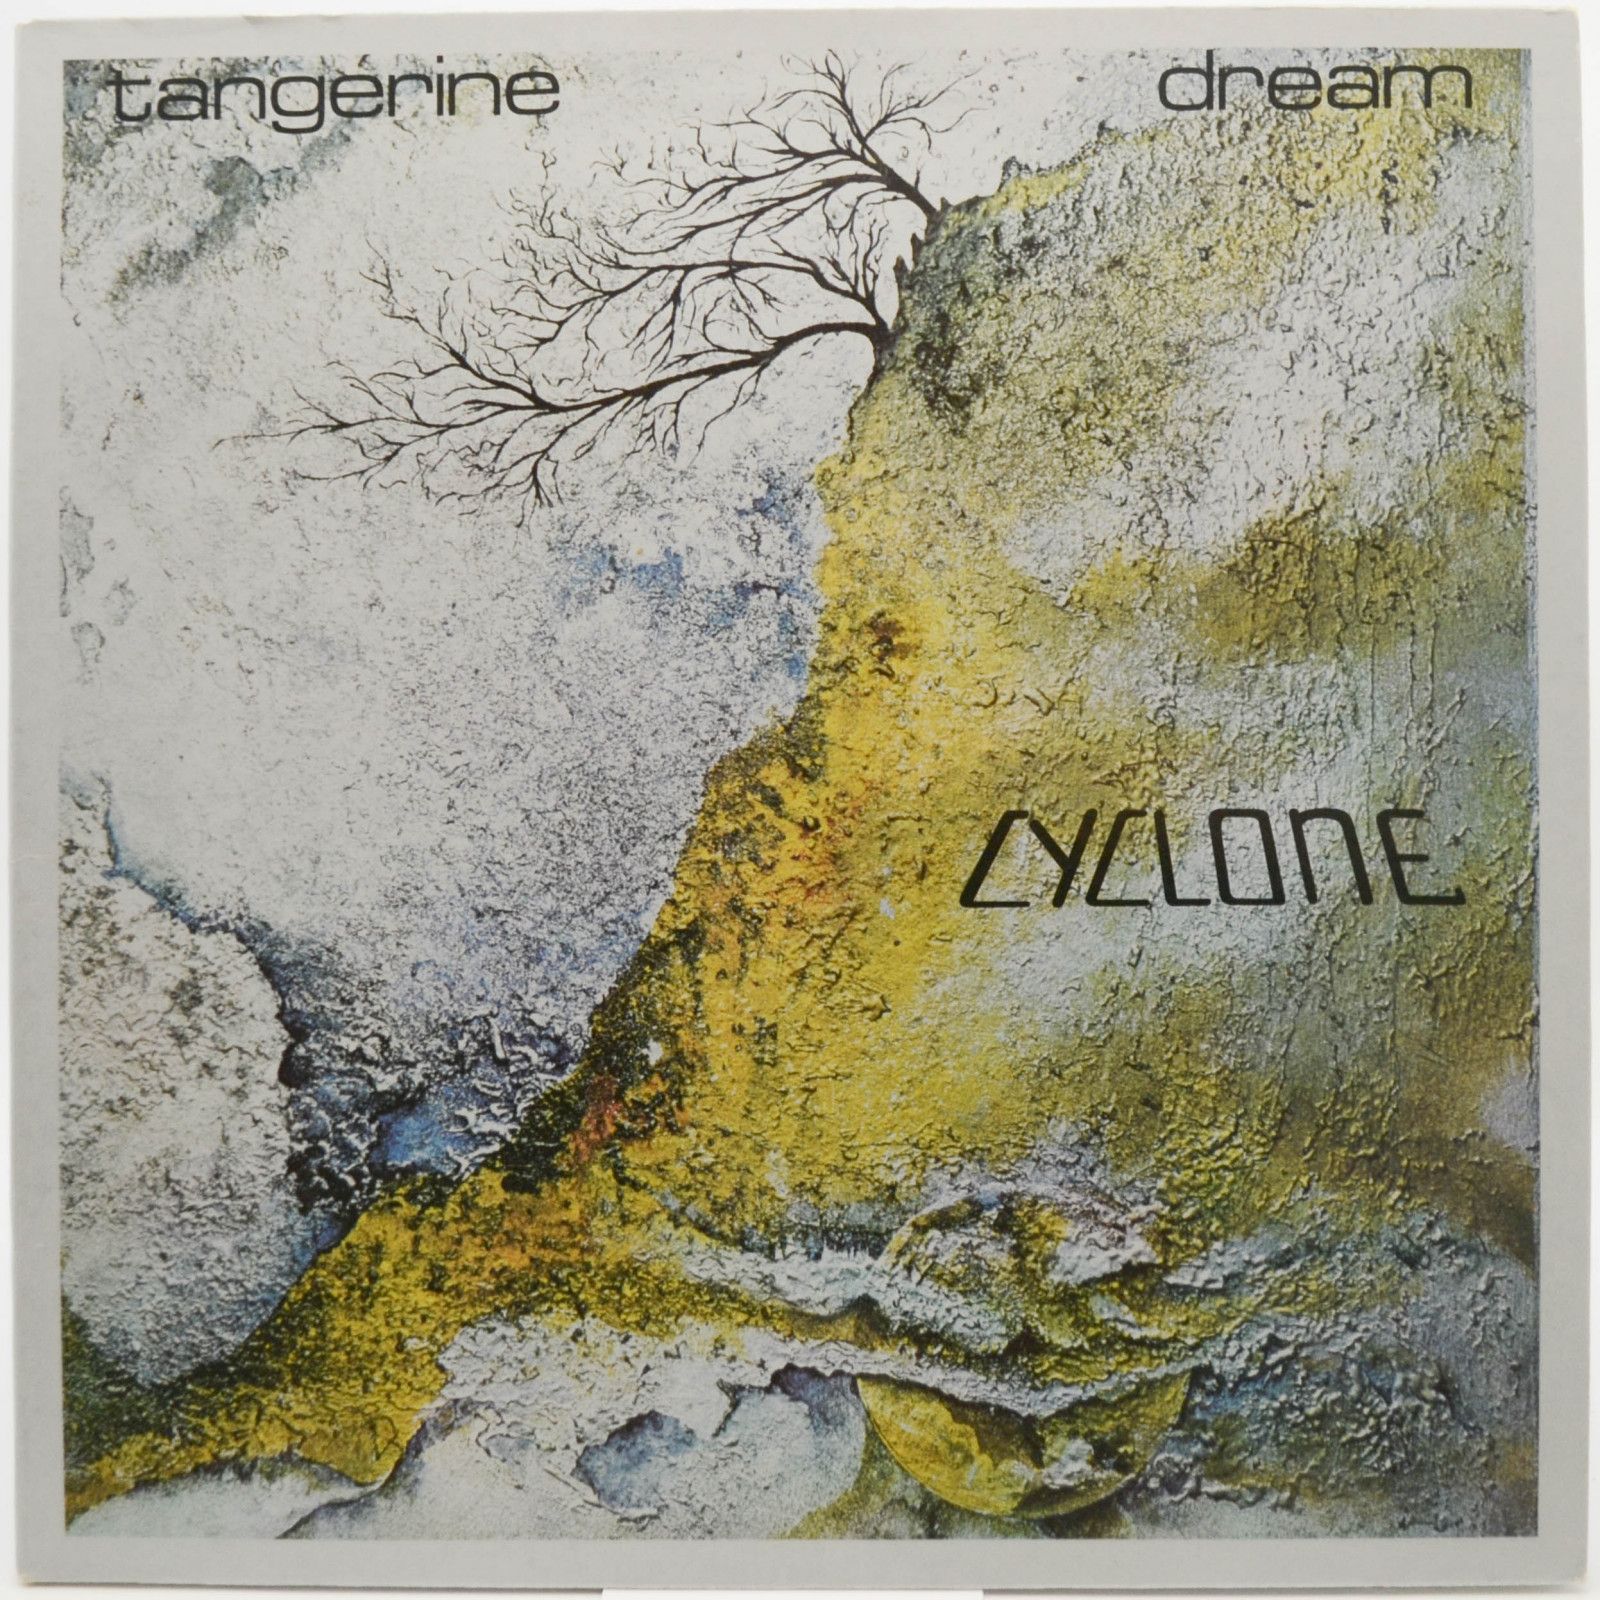 Tangerine Dream — Cyclone, 1983